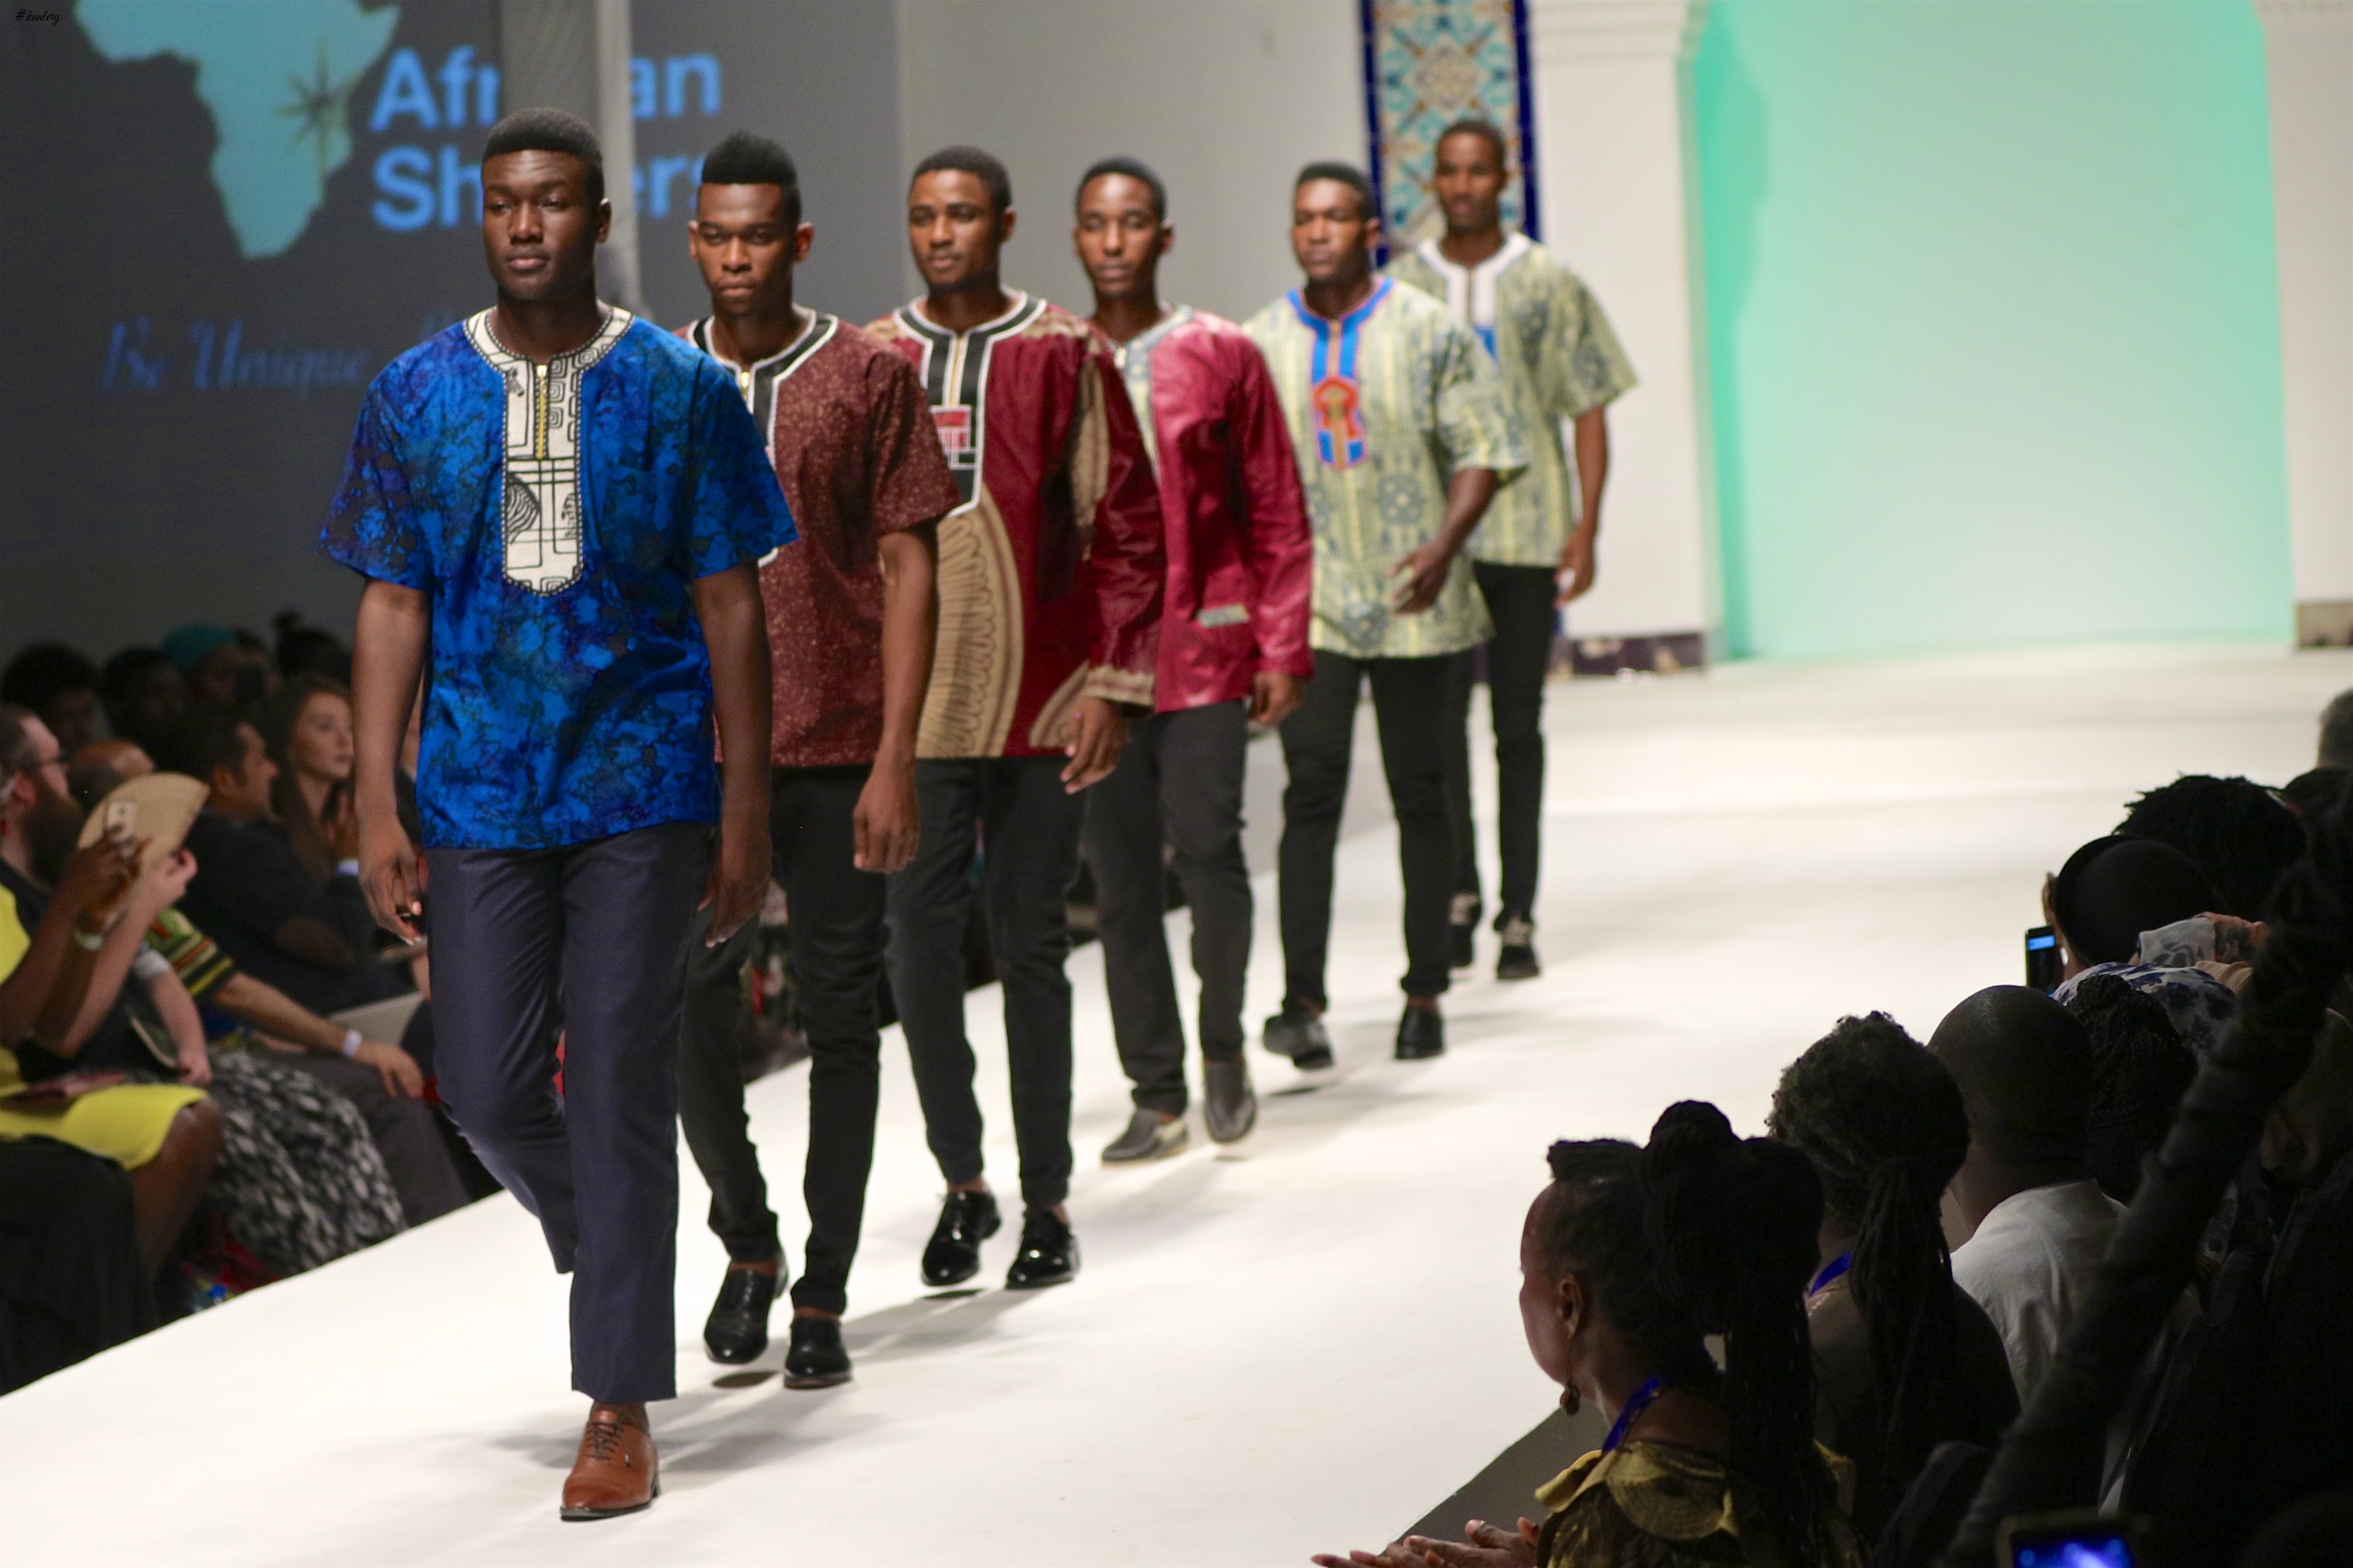 African Shiners @ Swahili Fashion Week 2016